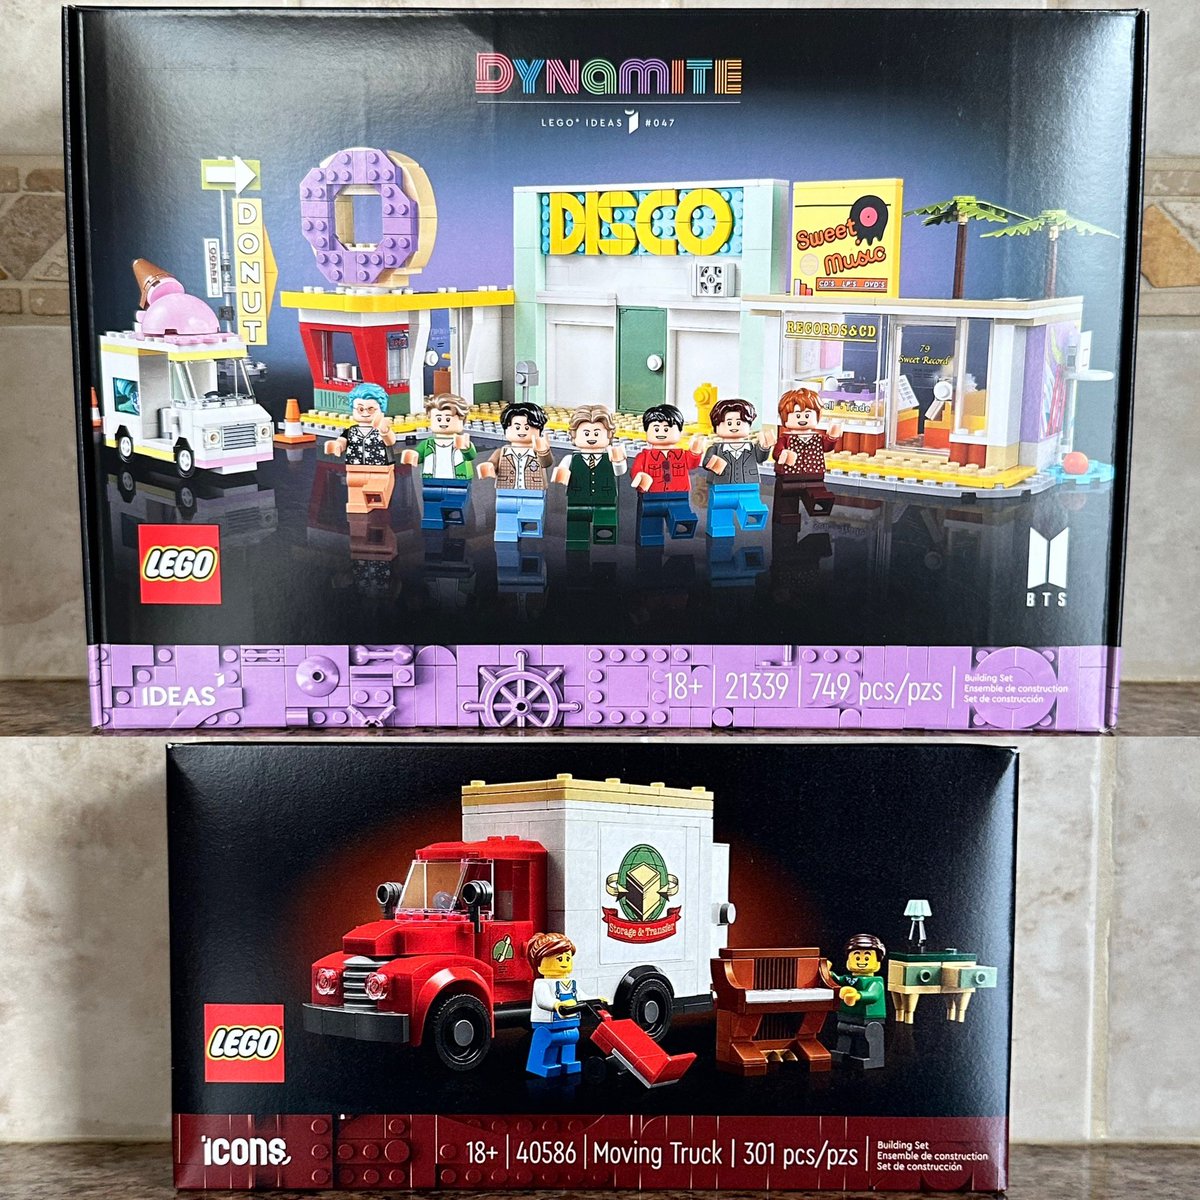 Mail Call! Got my Lego BTS Dynamite & freebie sets!
.
#BTS #Lego #legofan #Dynamite #BTSDynamite #Collectibles #DisTrackers